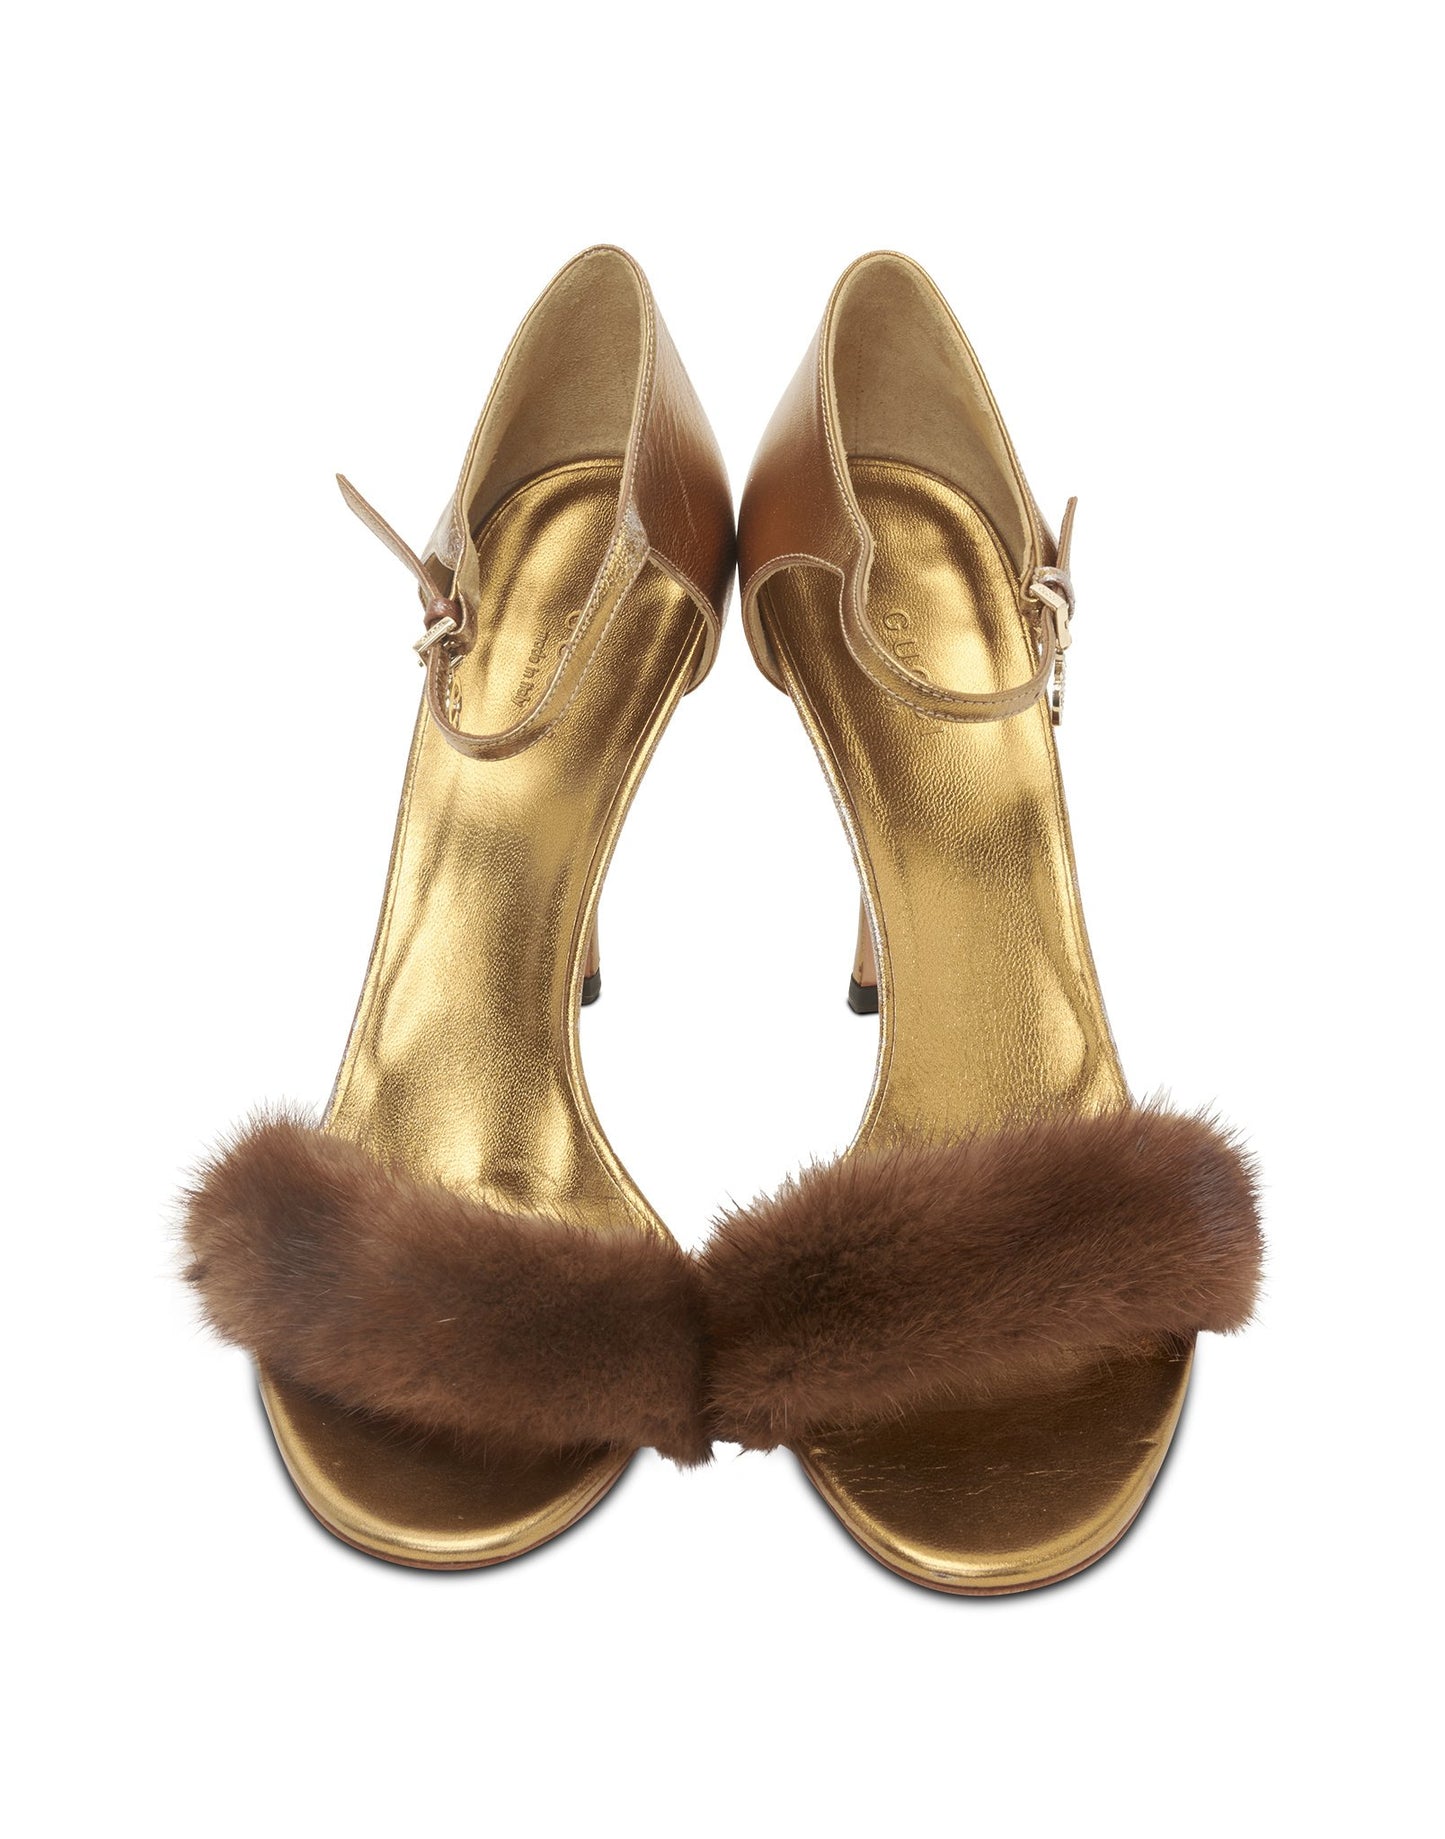 Gucci Gold "Tom Ford Era" Brown Fur Open Toe Heeled Sandals - 8.5B